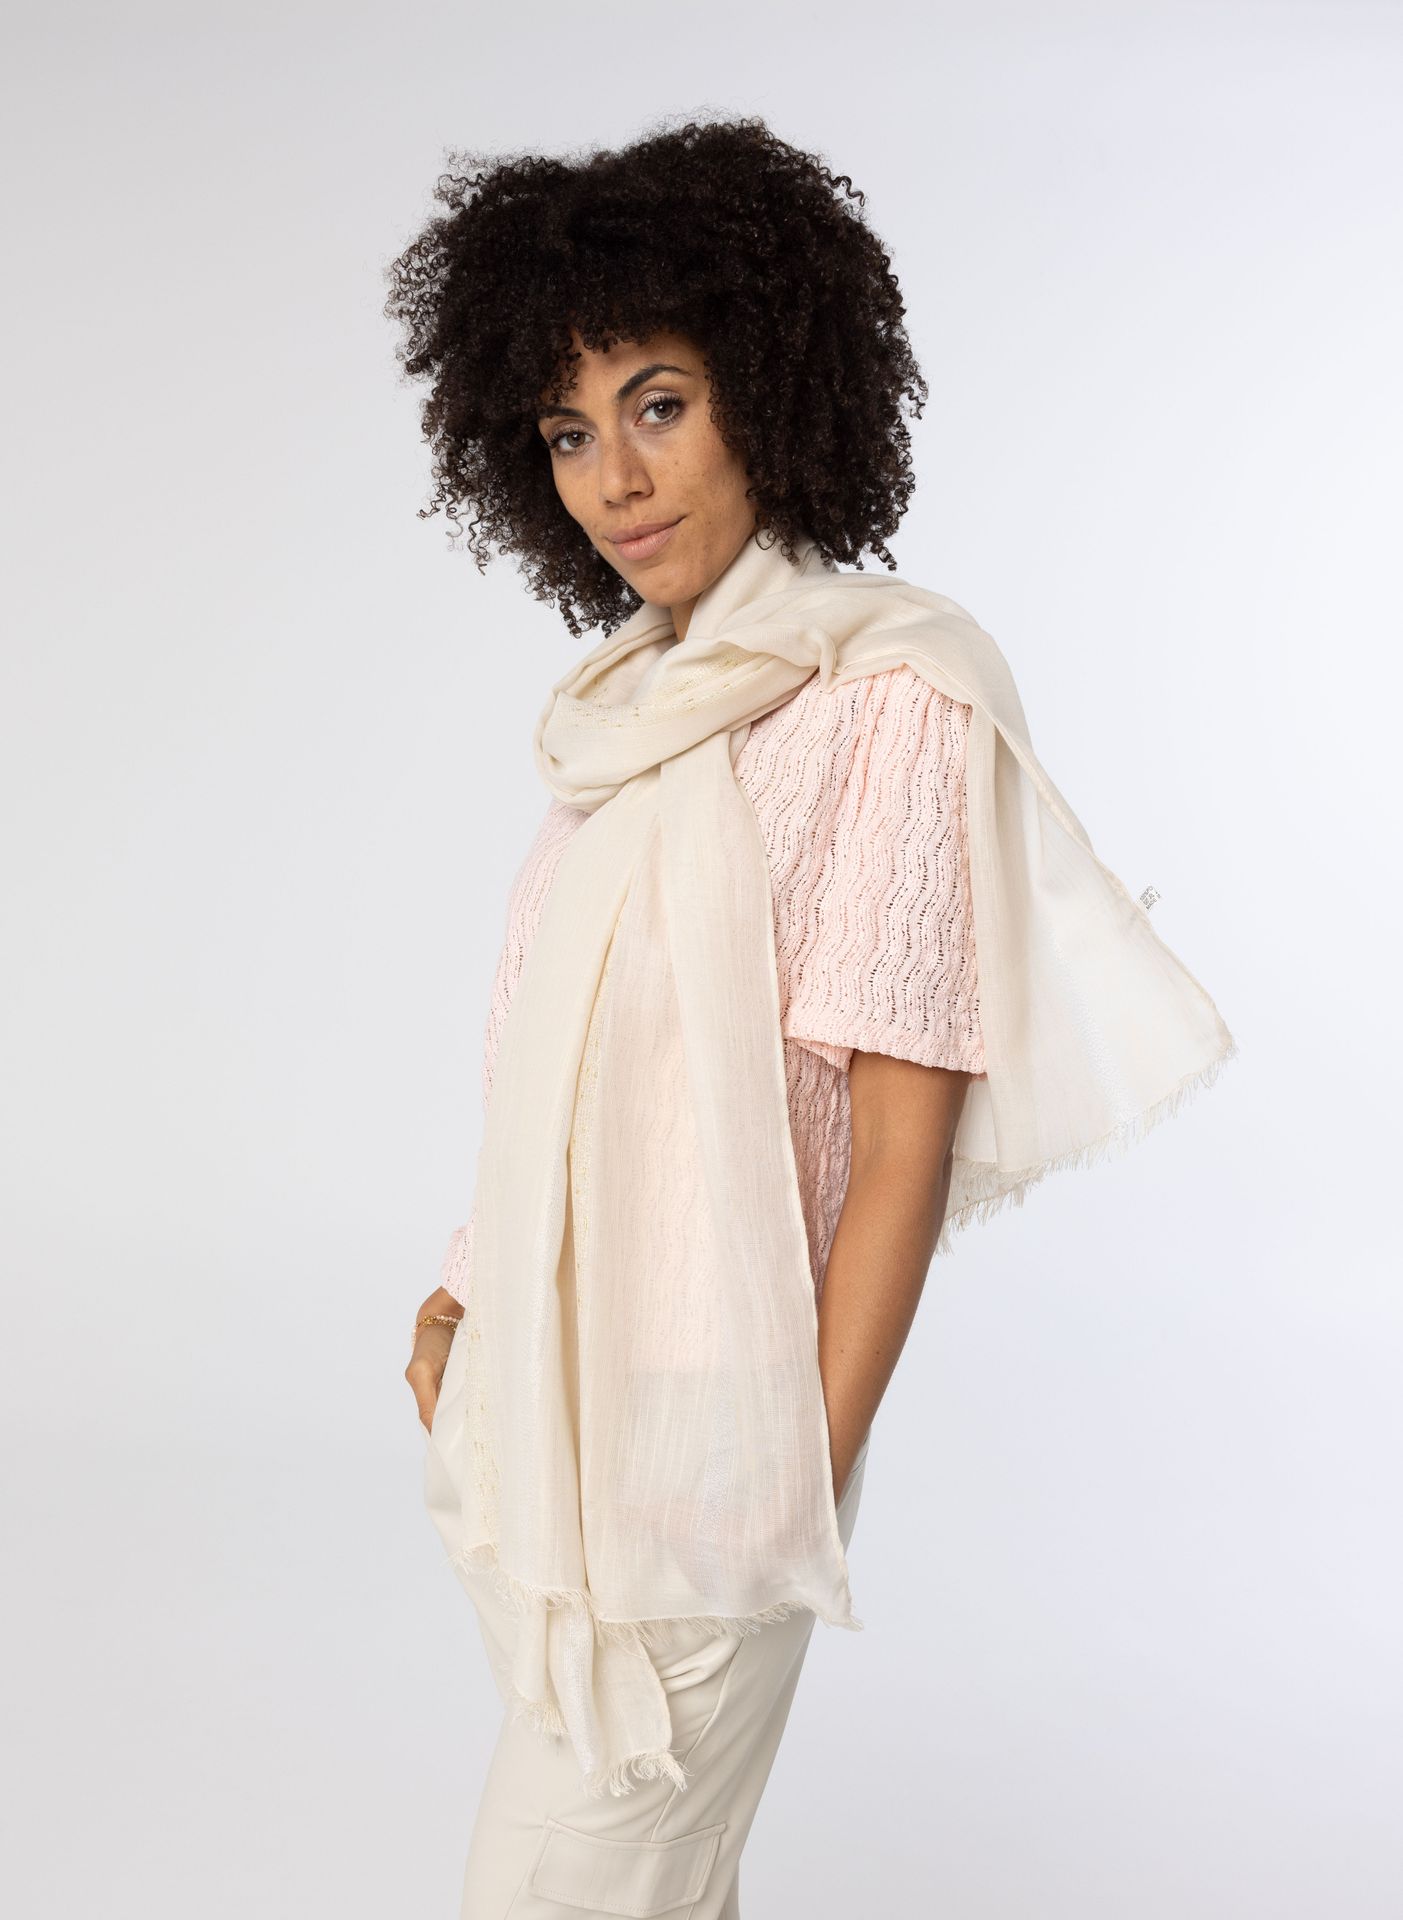 Norah Zandkleurige sjaal met glitters off-white 214400-101